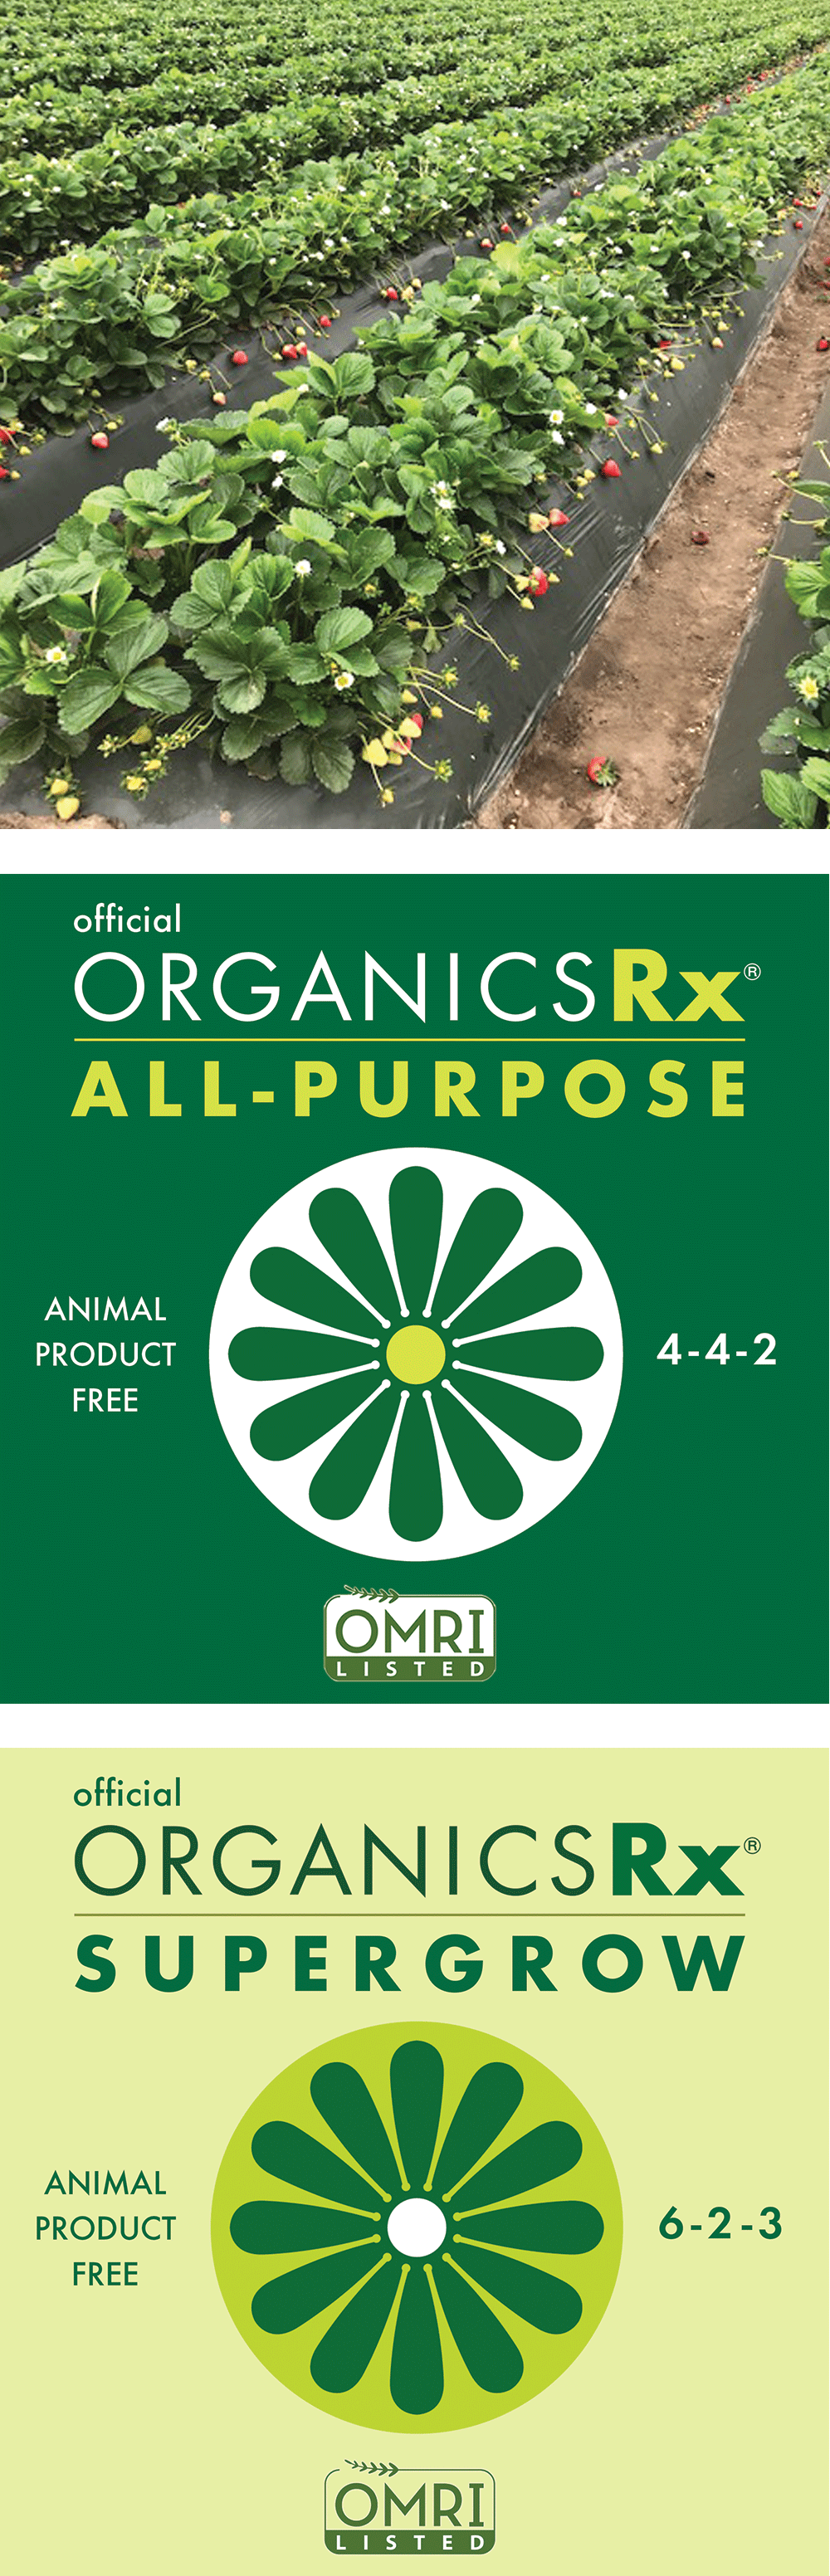 Organics Rx Products